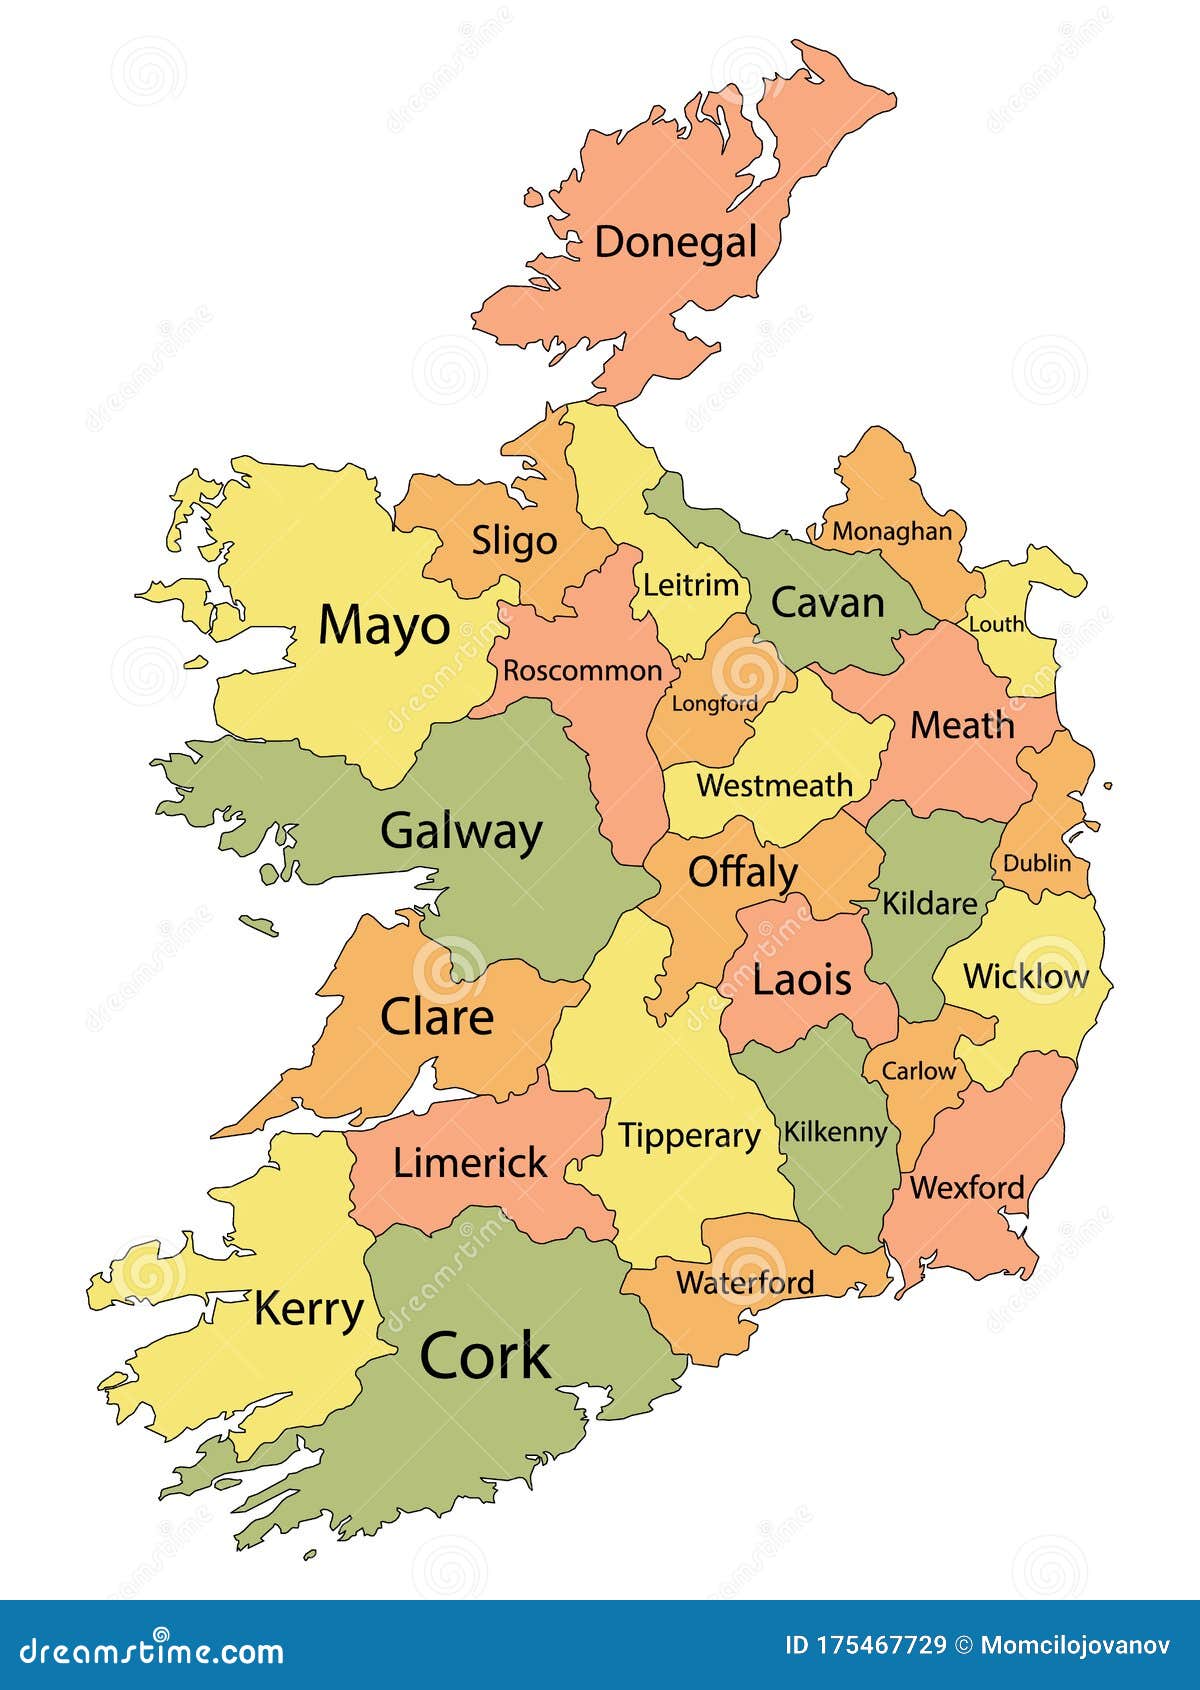 Ireland Map